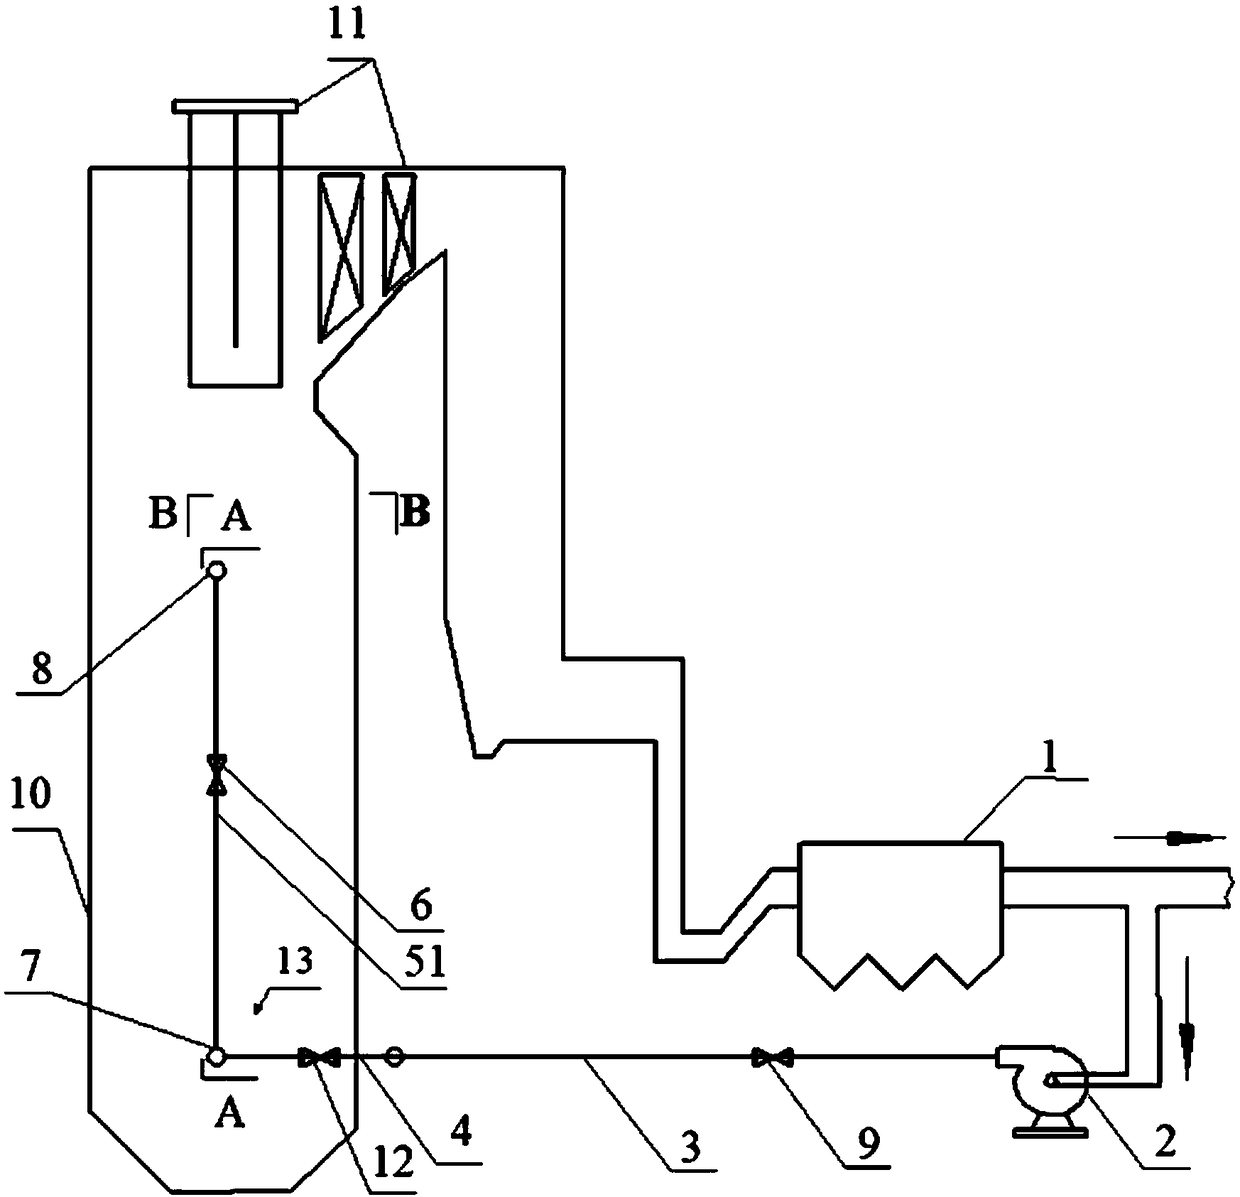 Boiler smoke recirculation system and method